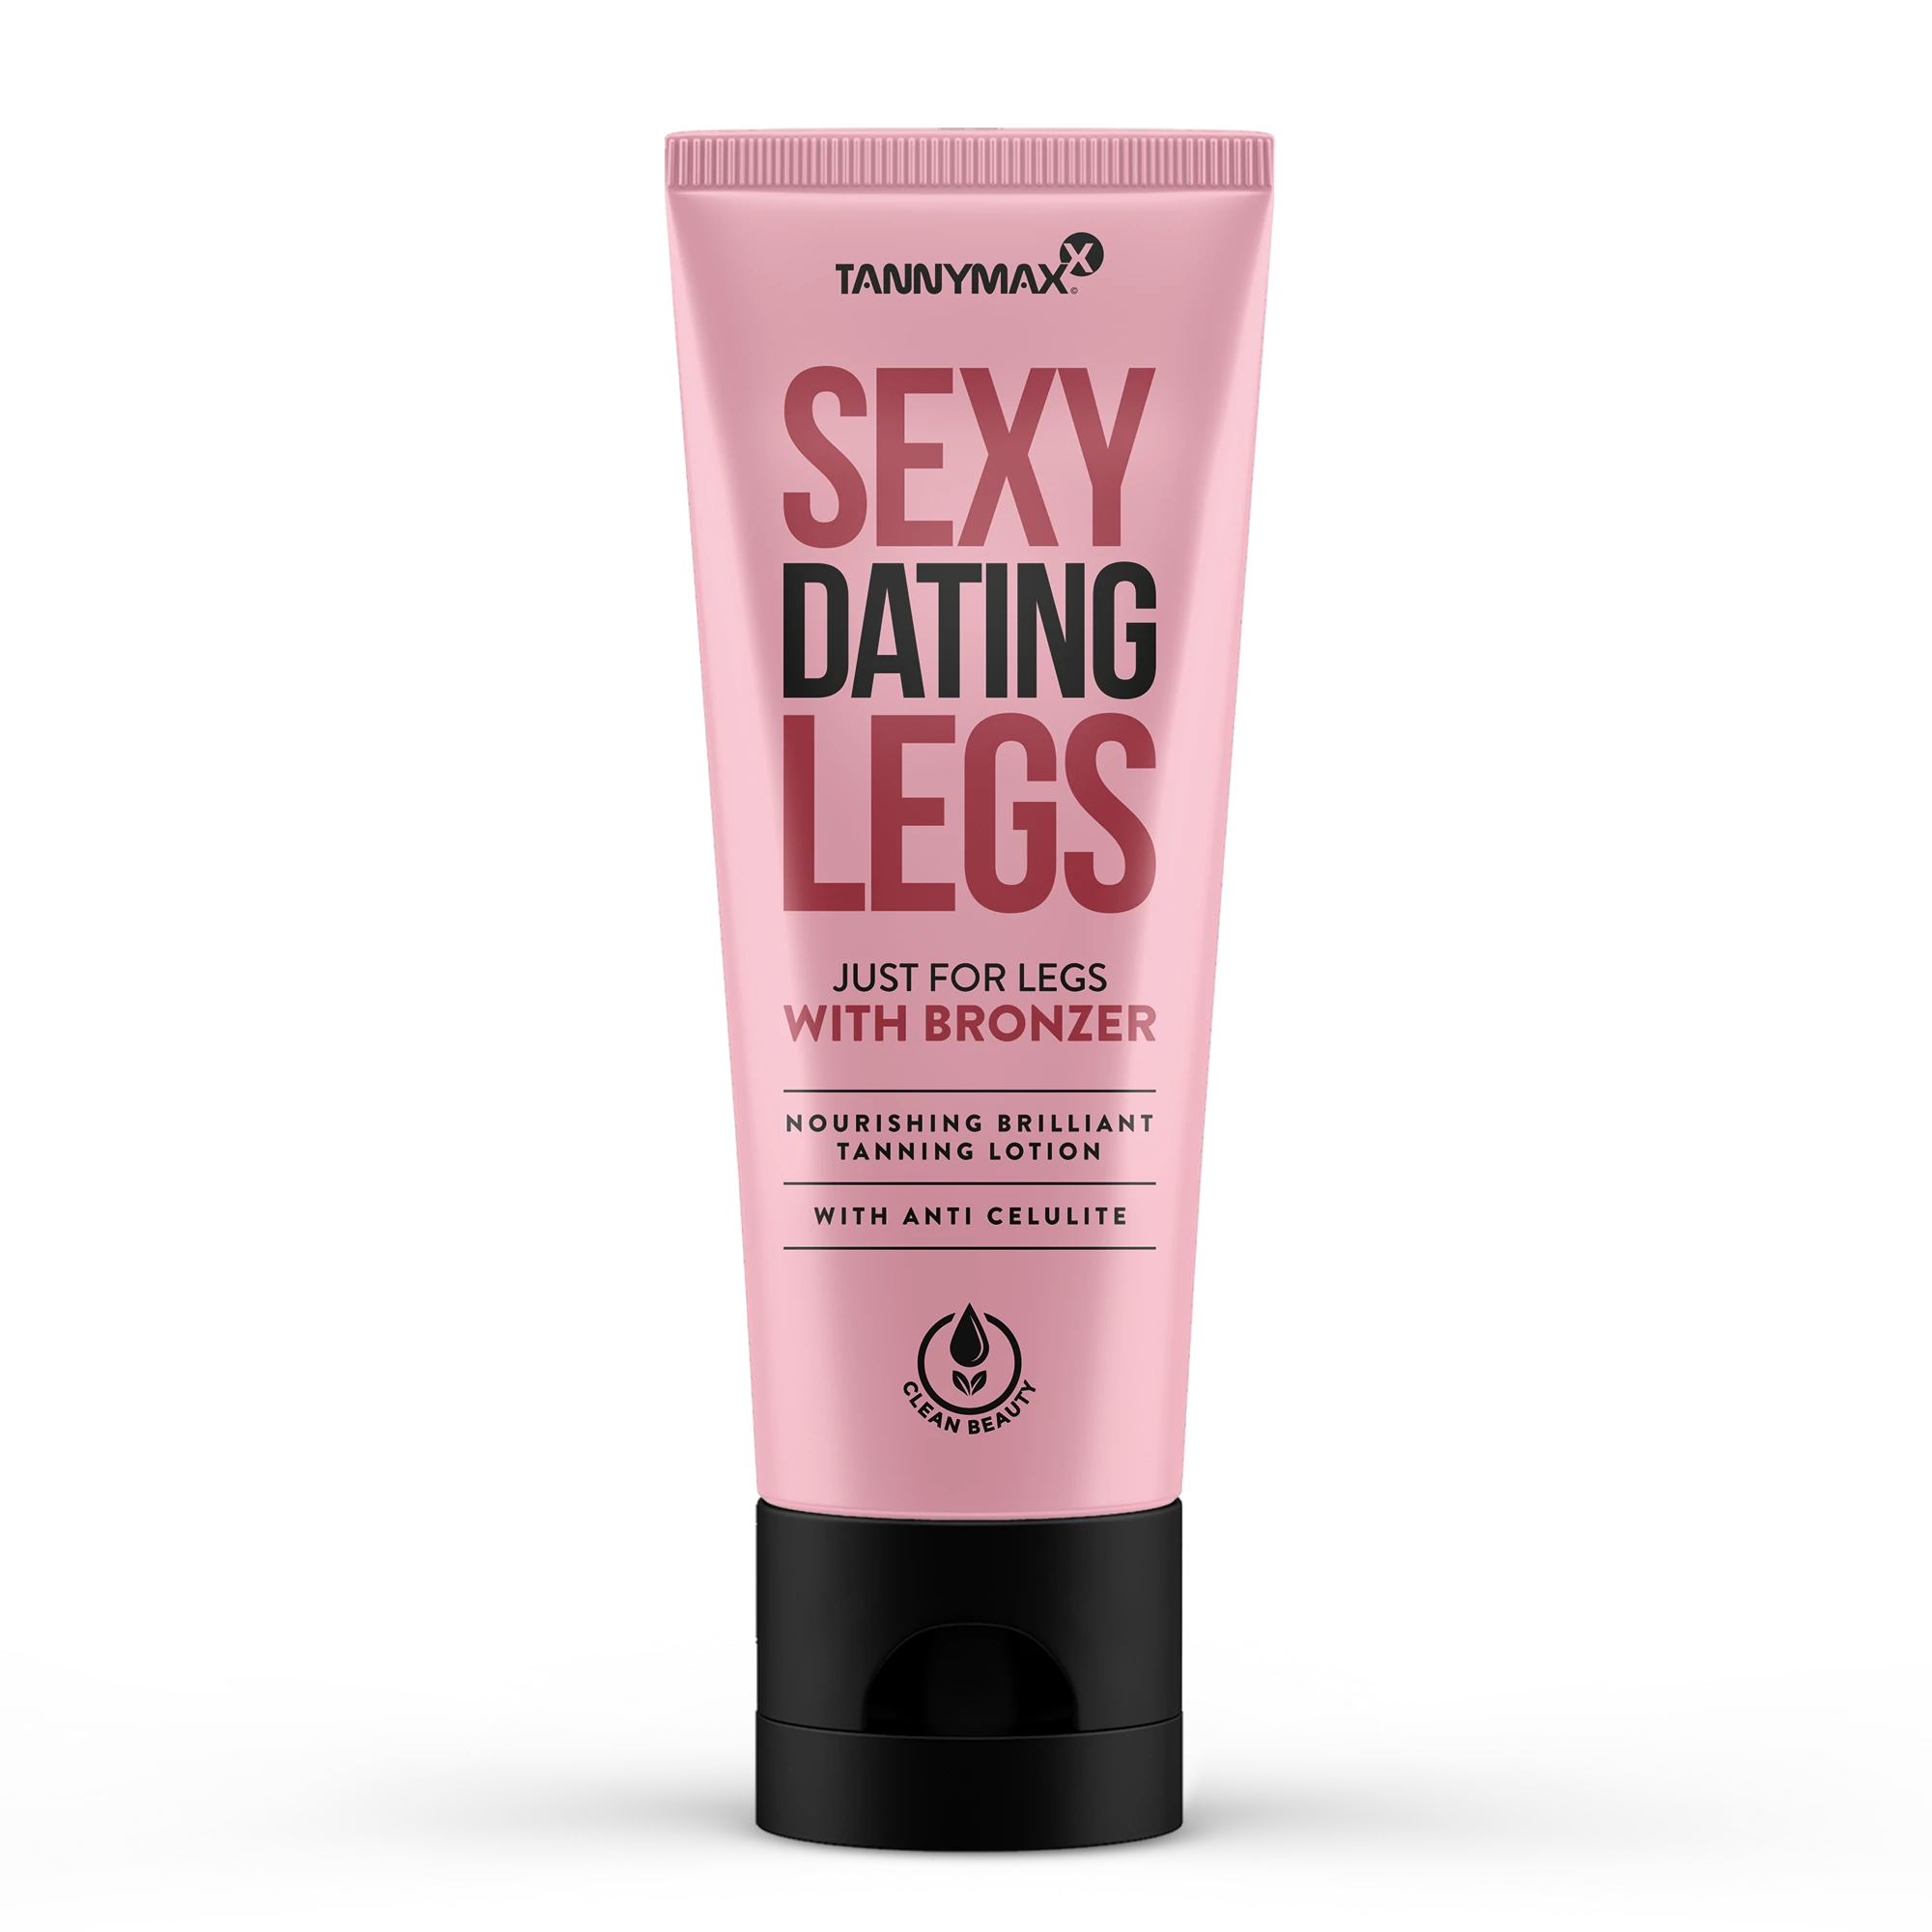 Tannymaxx Sexy Datings Legs Bronzer   150 ml 